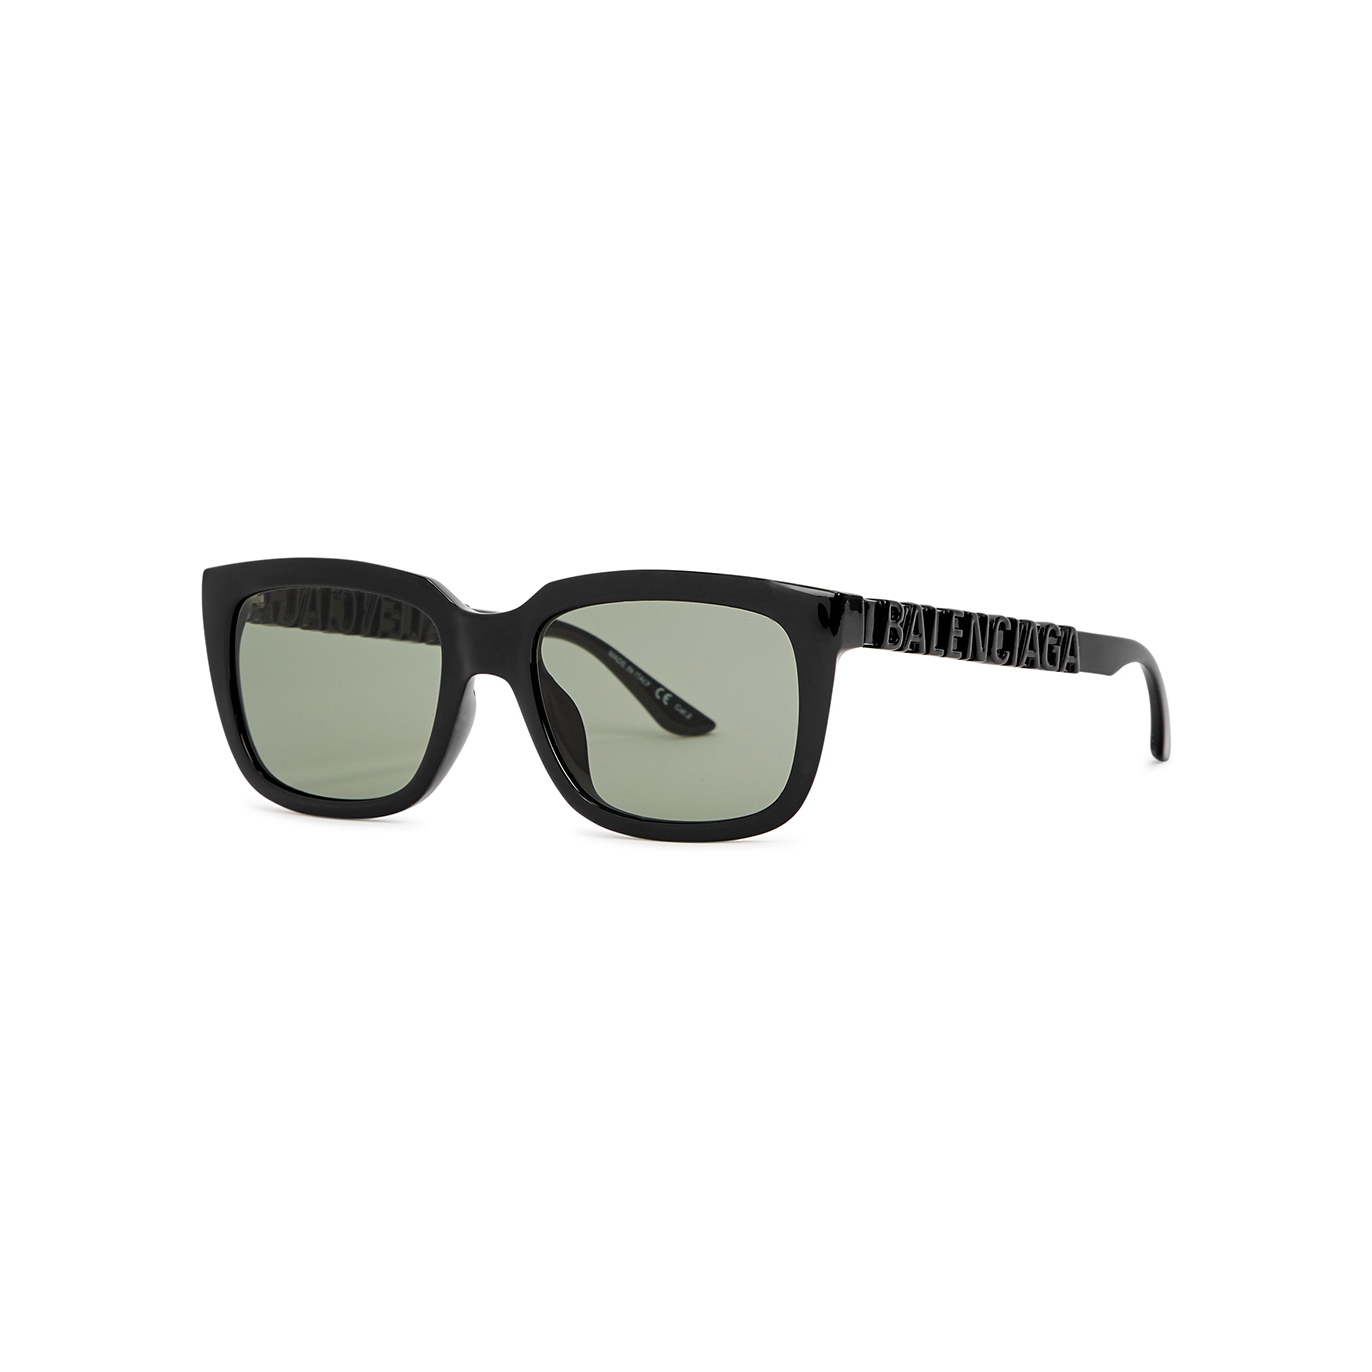 Balenciaga Black Rectangle-frame Sunglasses, Sunglasses, Black